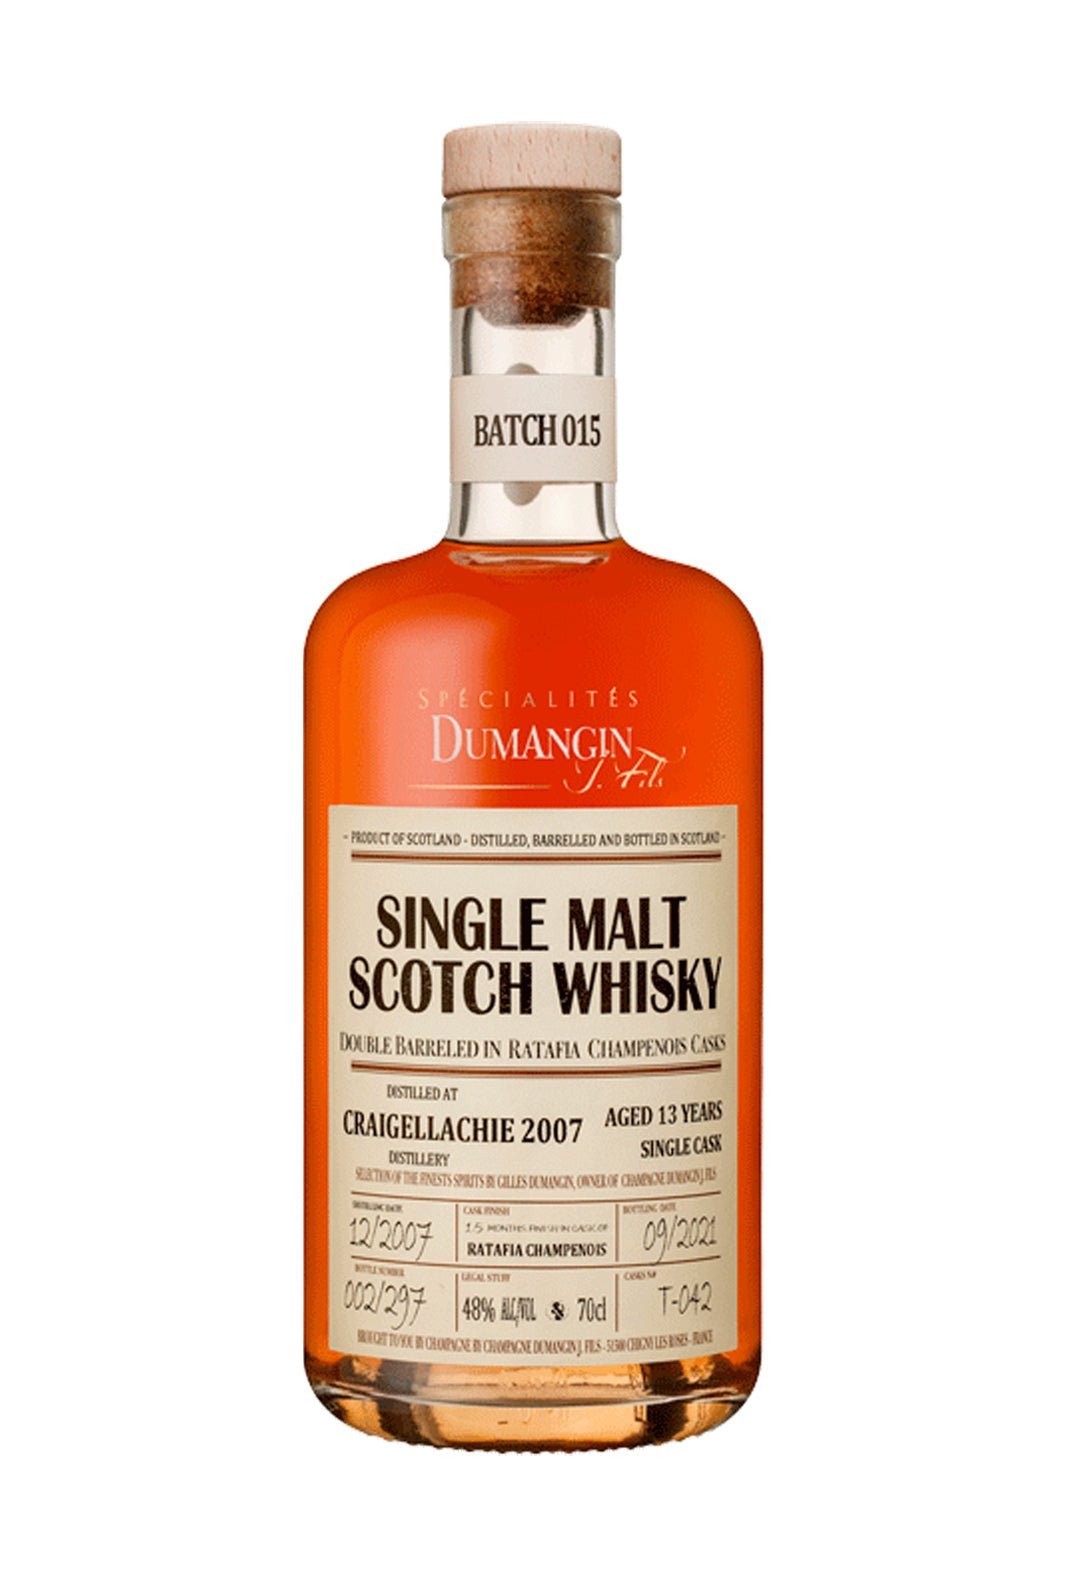 Dumangin Batch 015 Craigellachie (Scotland) 2007 Single Malt Whisky 48% 700ml | Whiskey | Shop online at Spirits of France